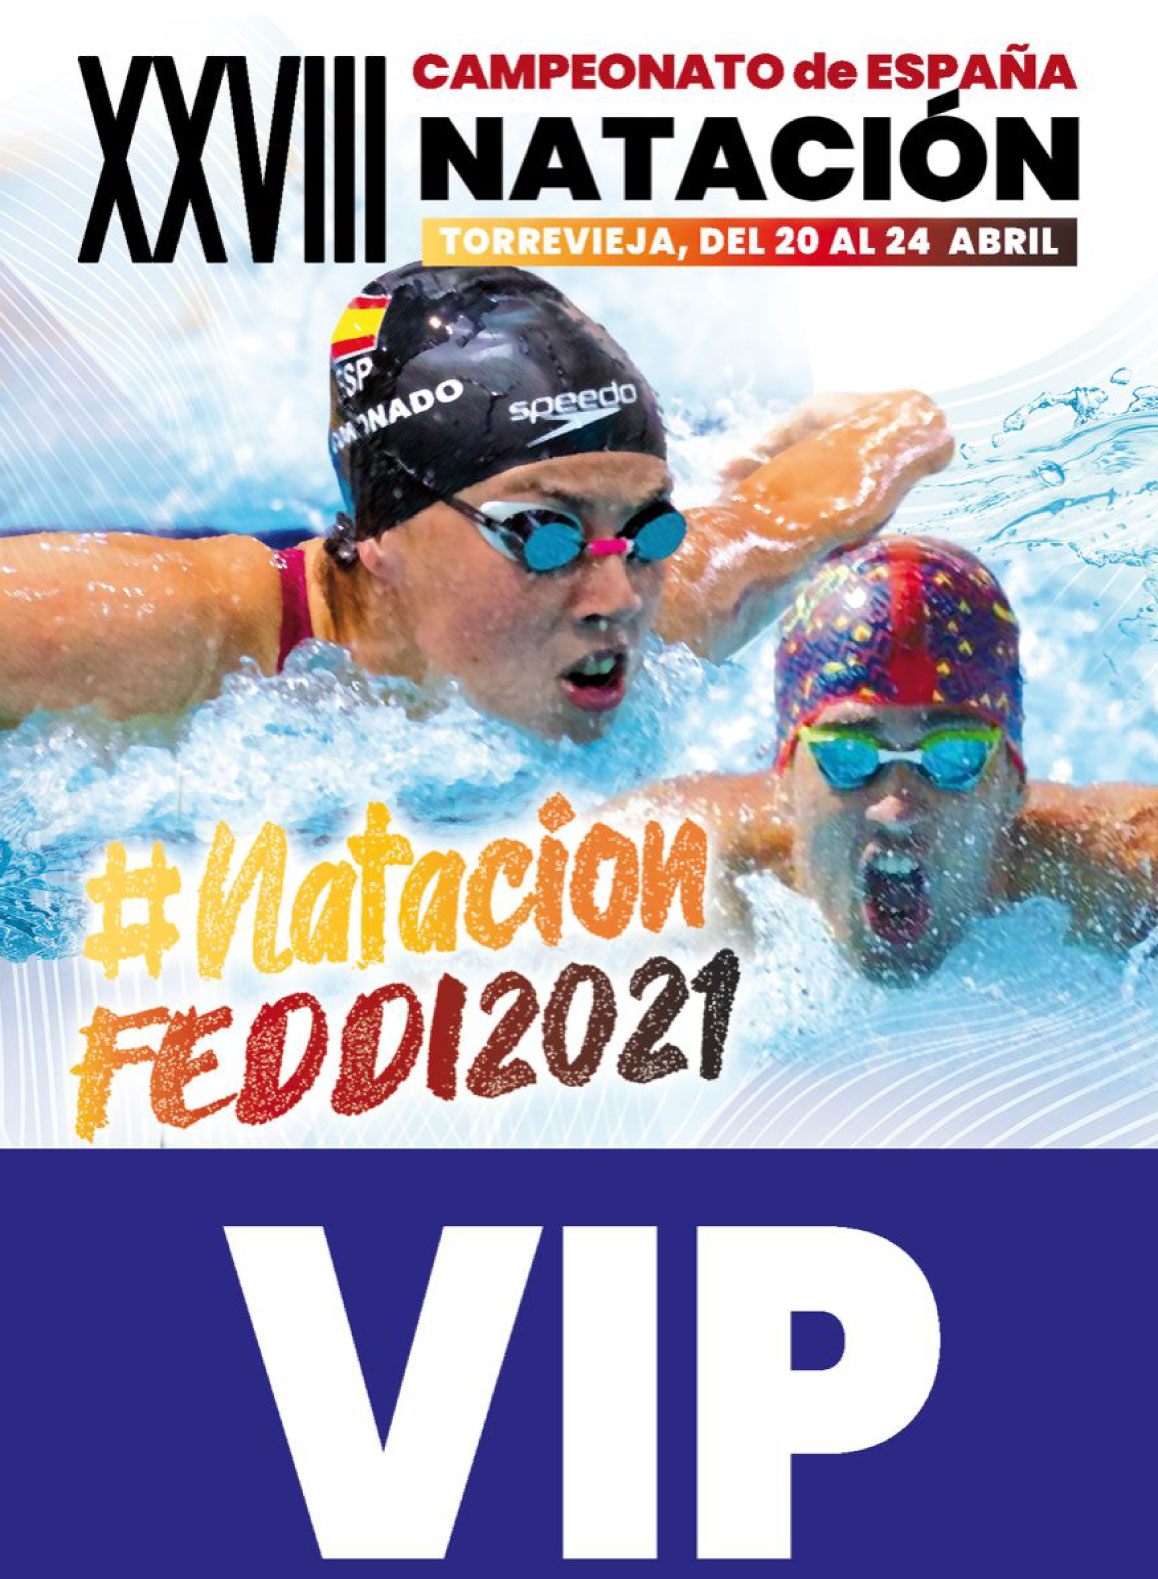 Campeonato de espana natacion FEDDI creacion de imagen para evento